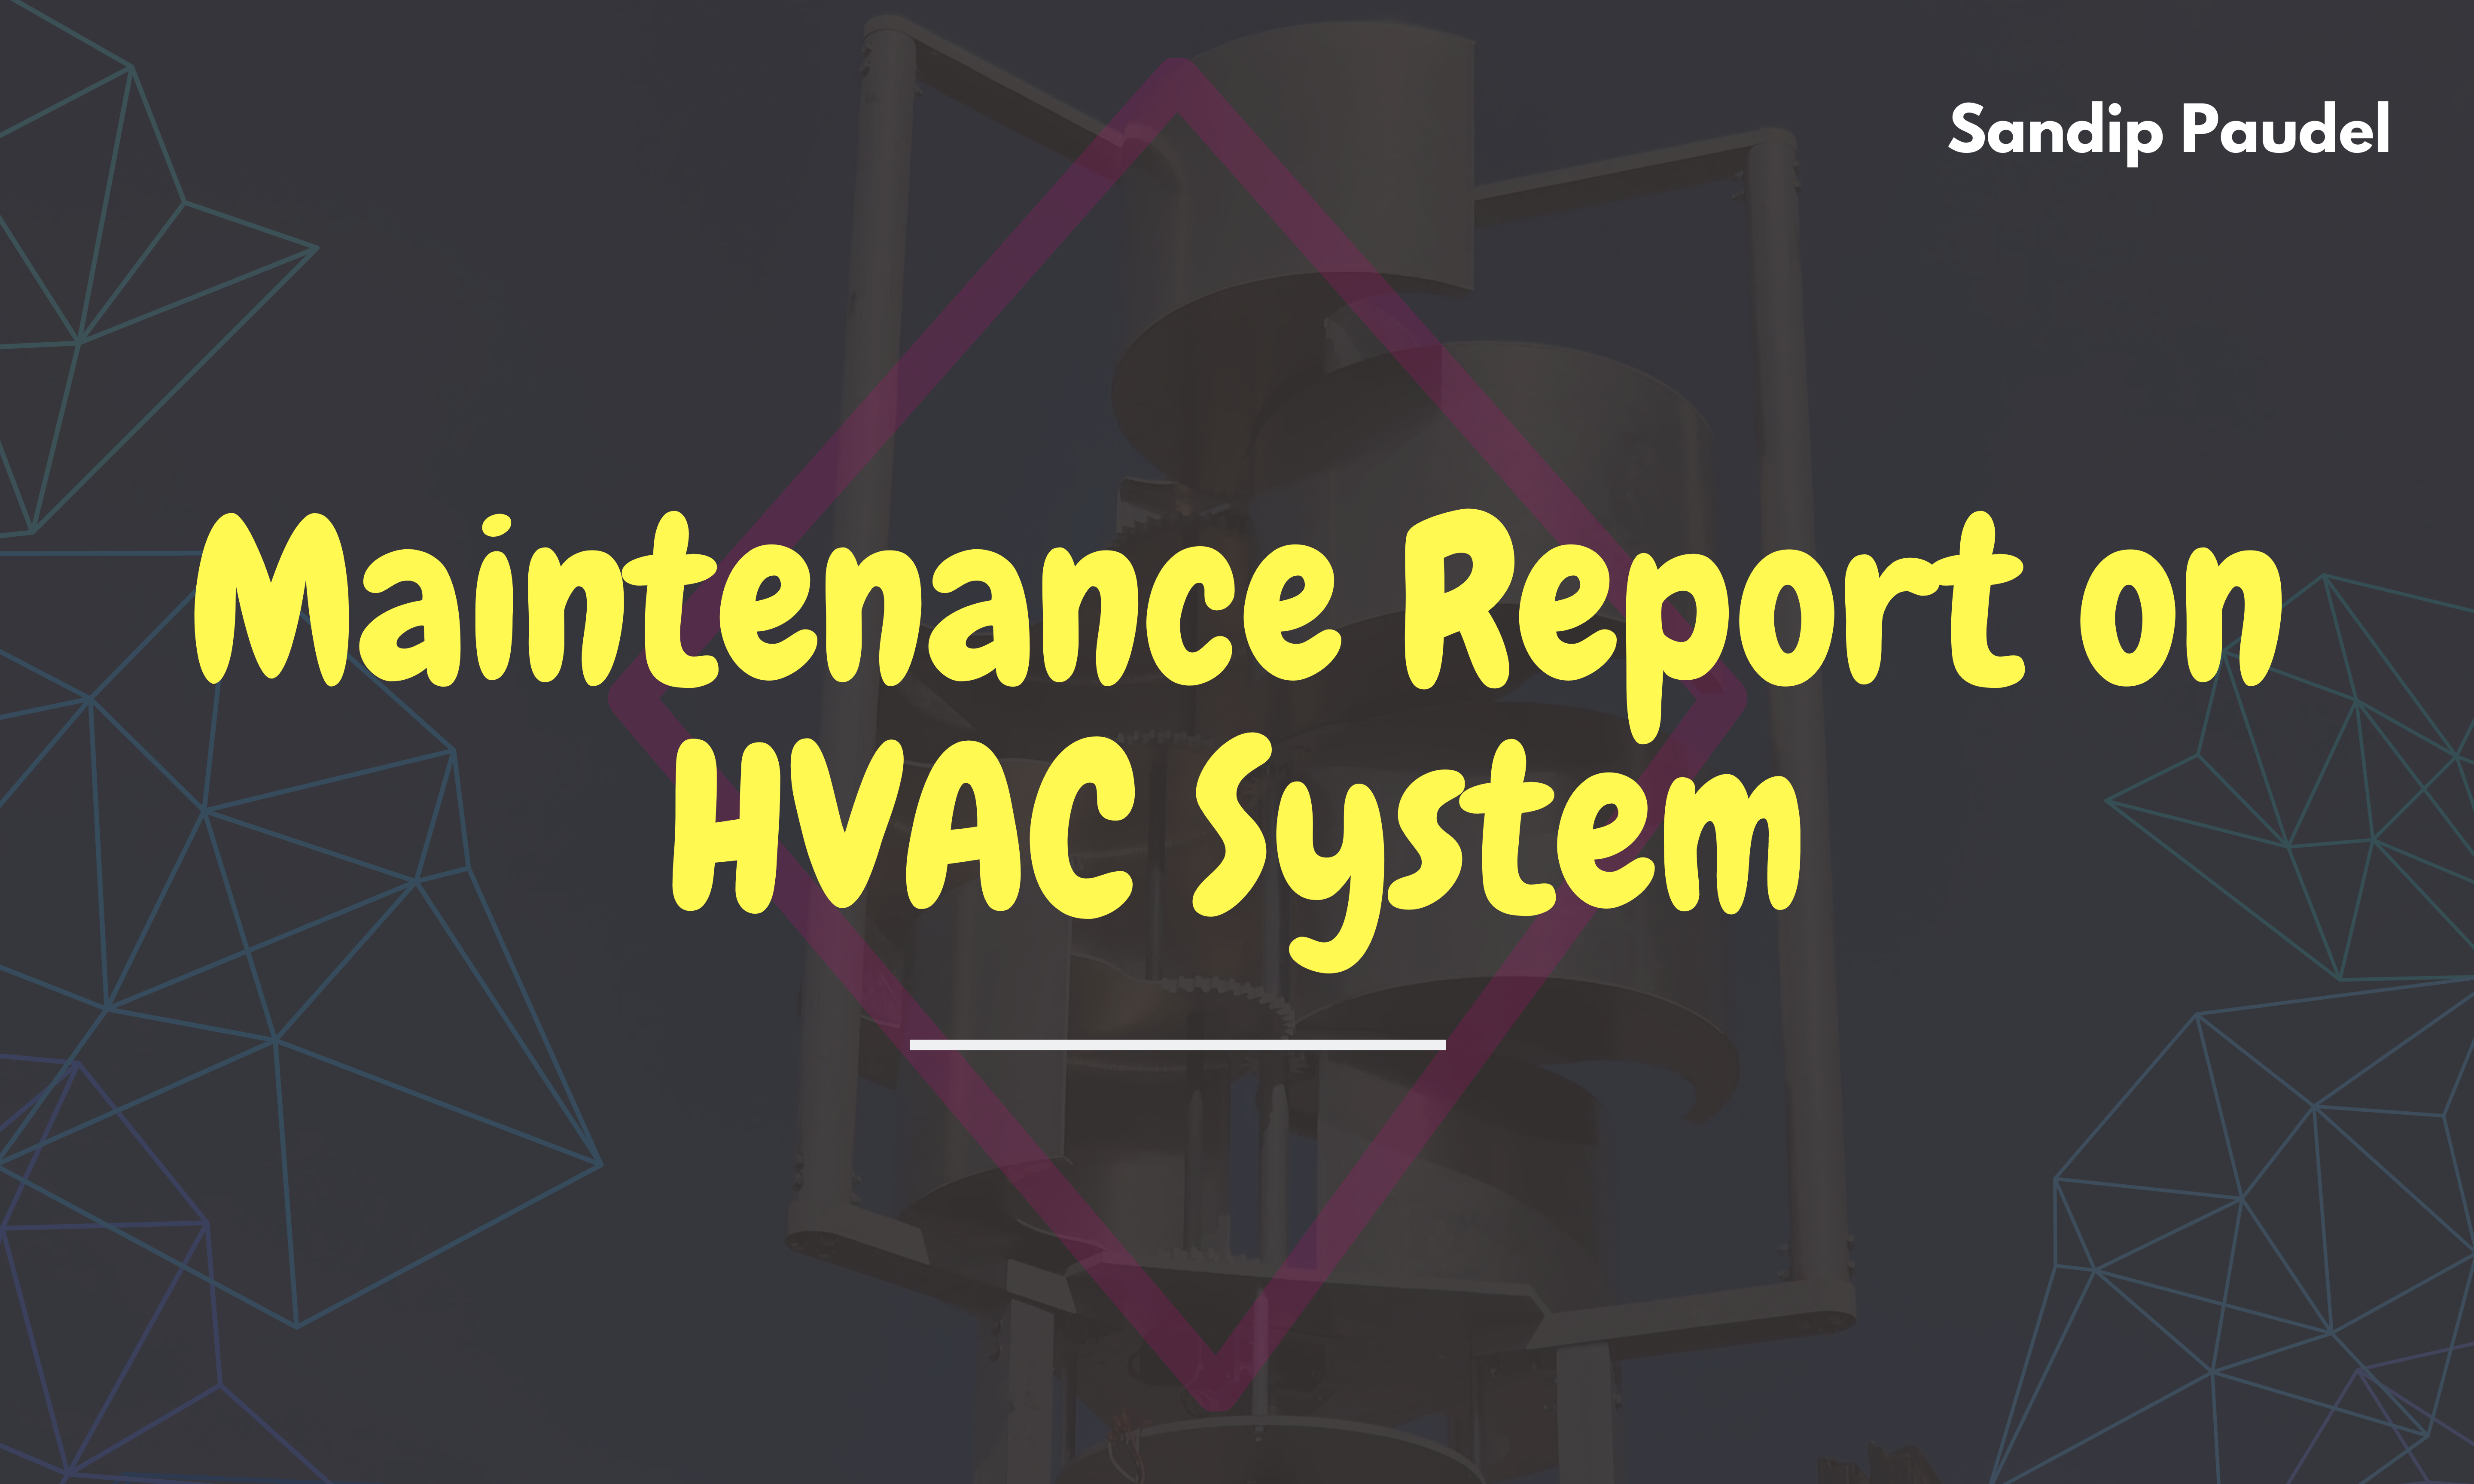 Maintenance Report on HVAC System, Sandip Paudel